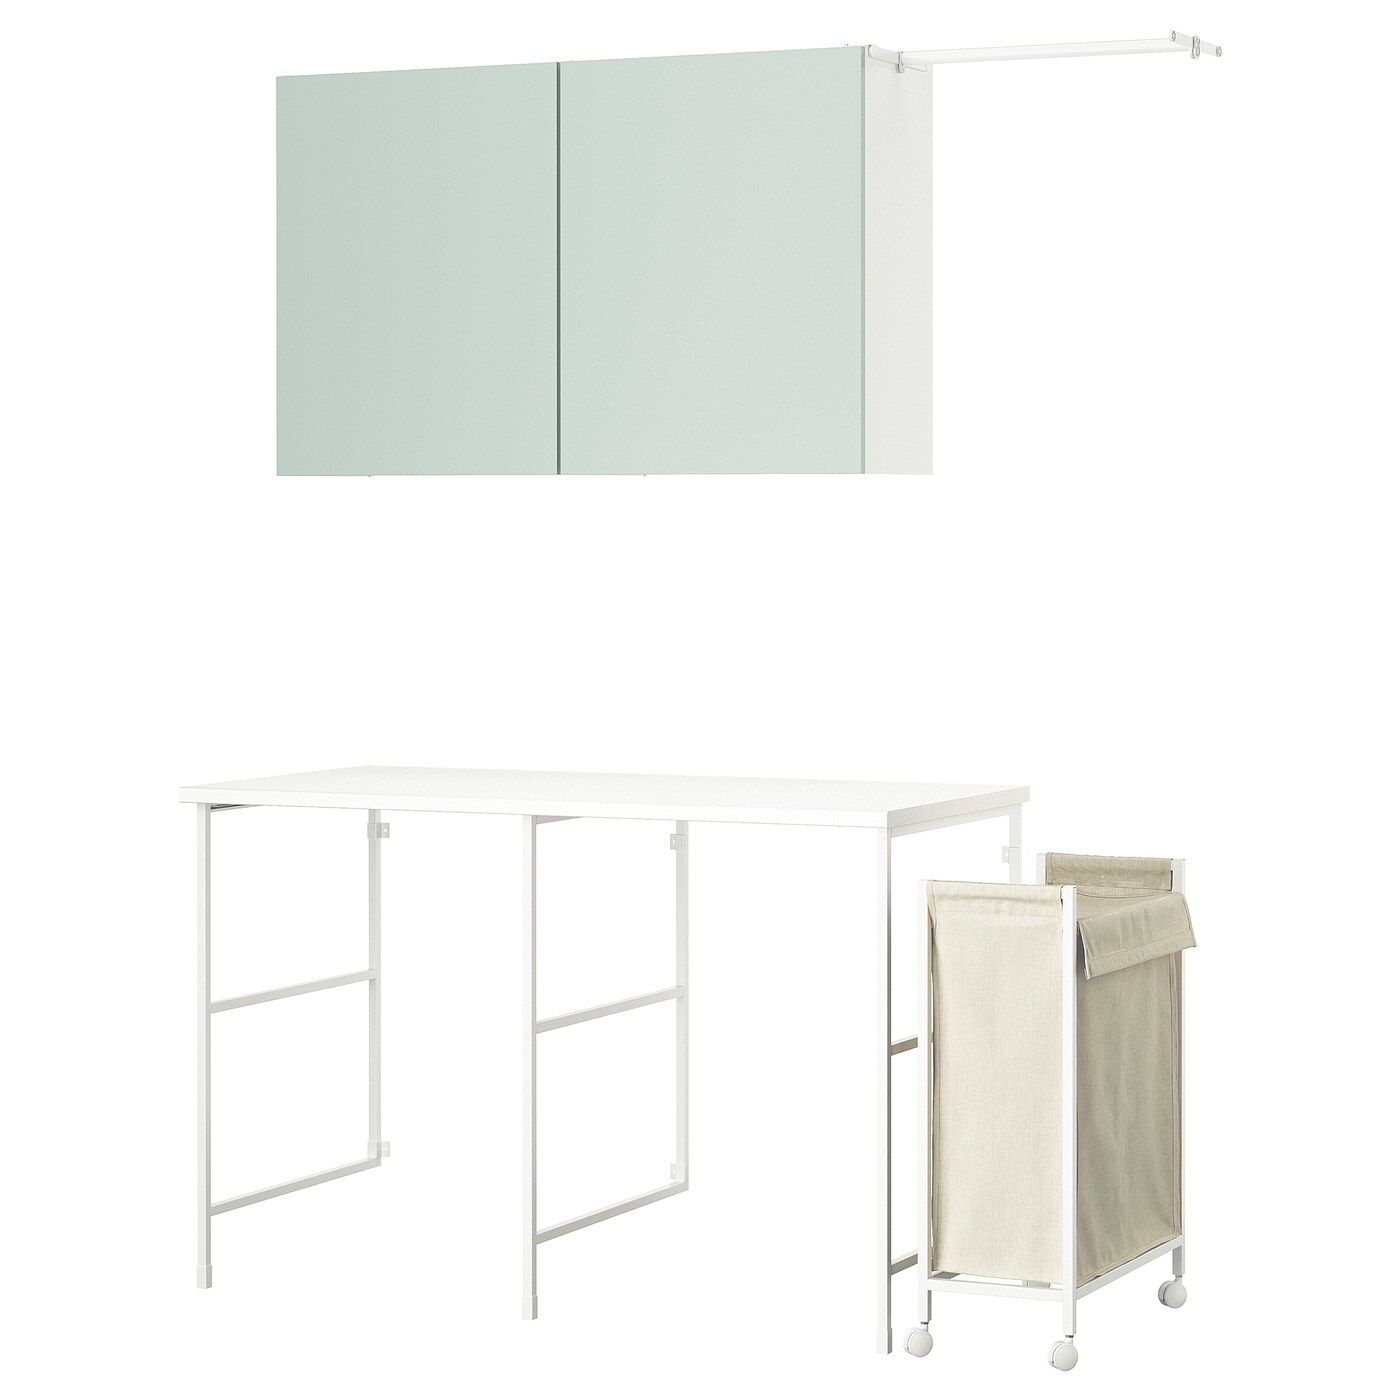 Комбинация для ванной - IKEA ENHET, 139х63.5х90.5 см, белый/светло-зеленый, ЭНХЕТ ИКЕА